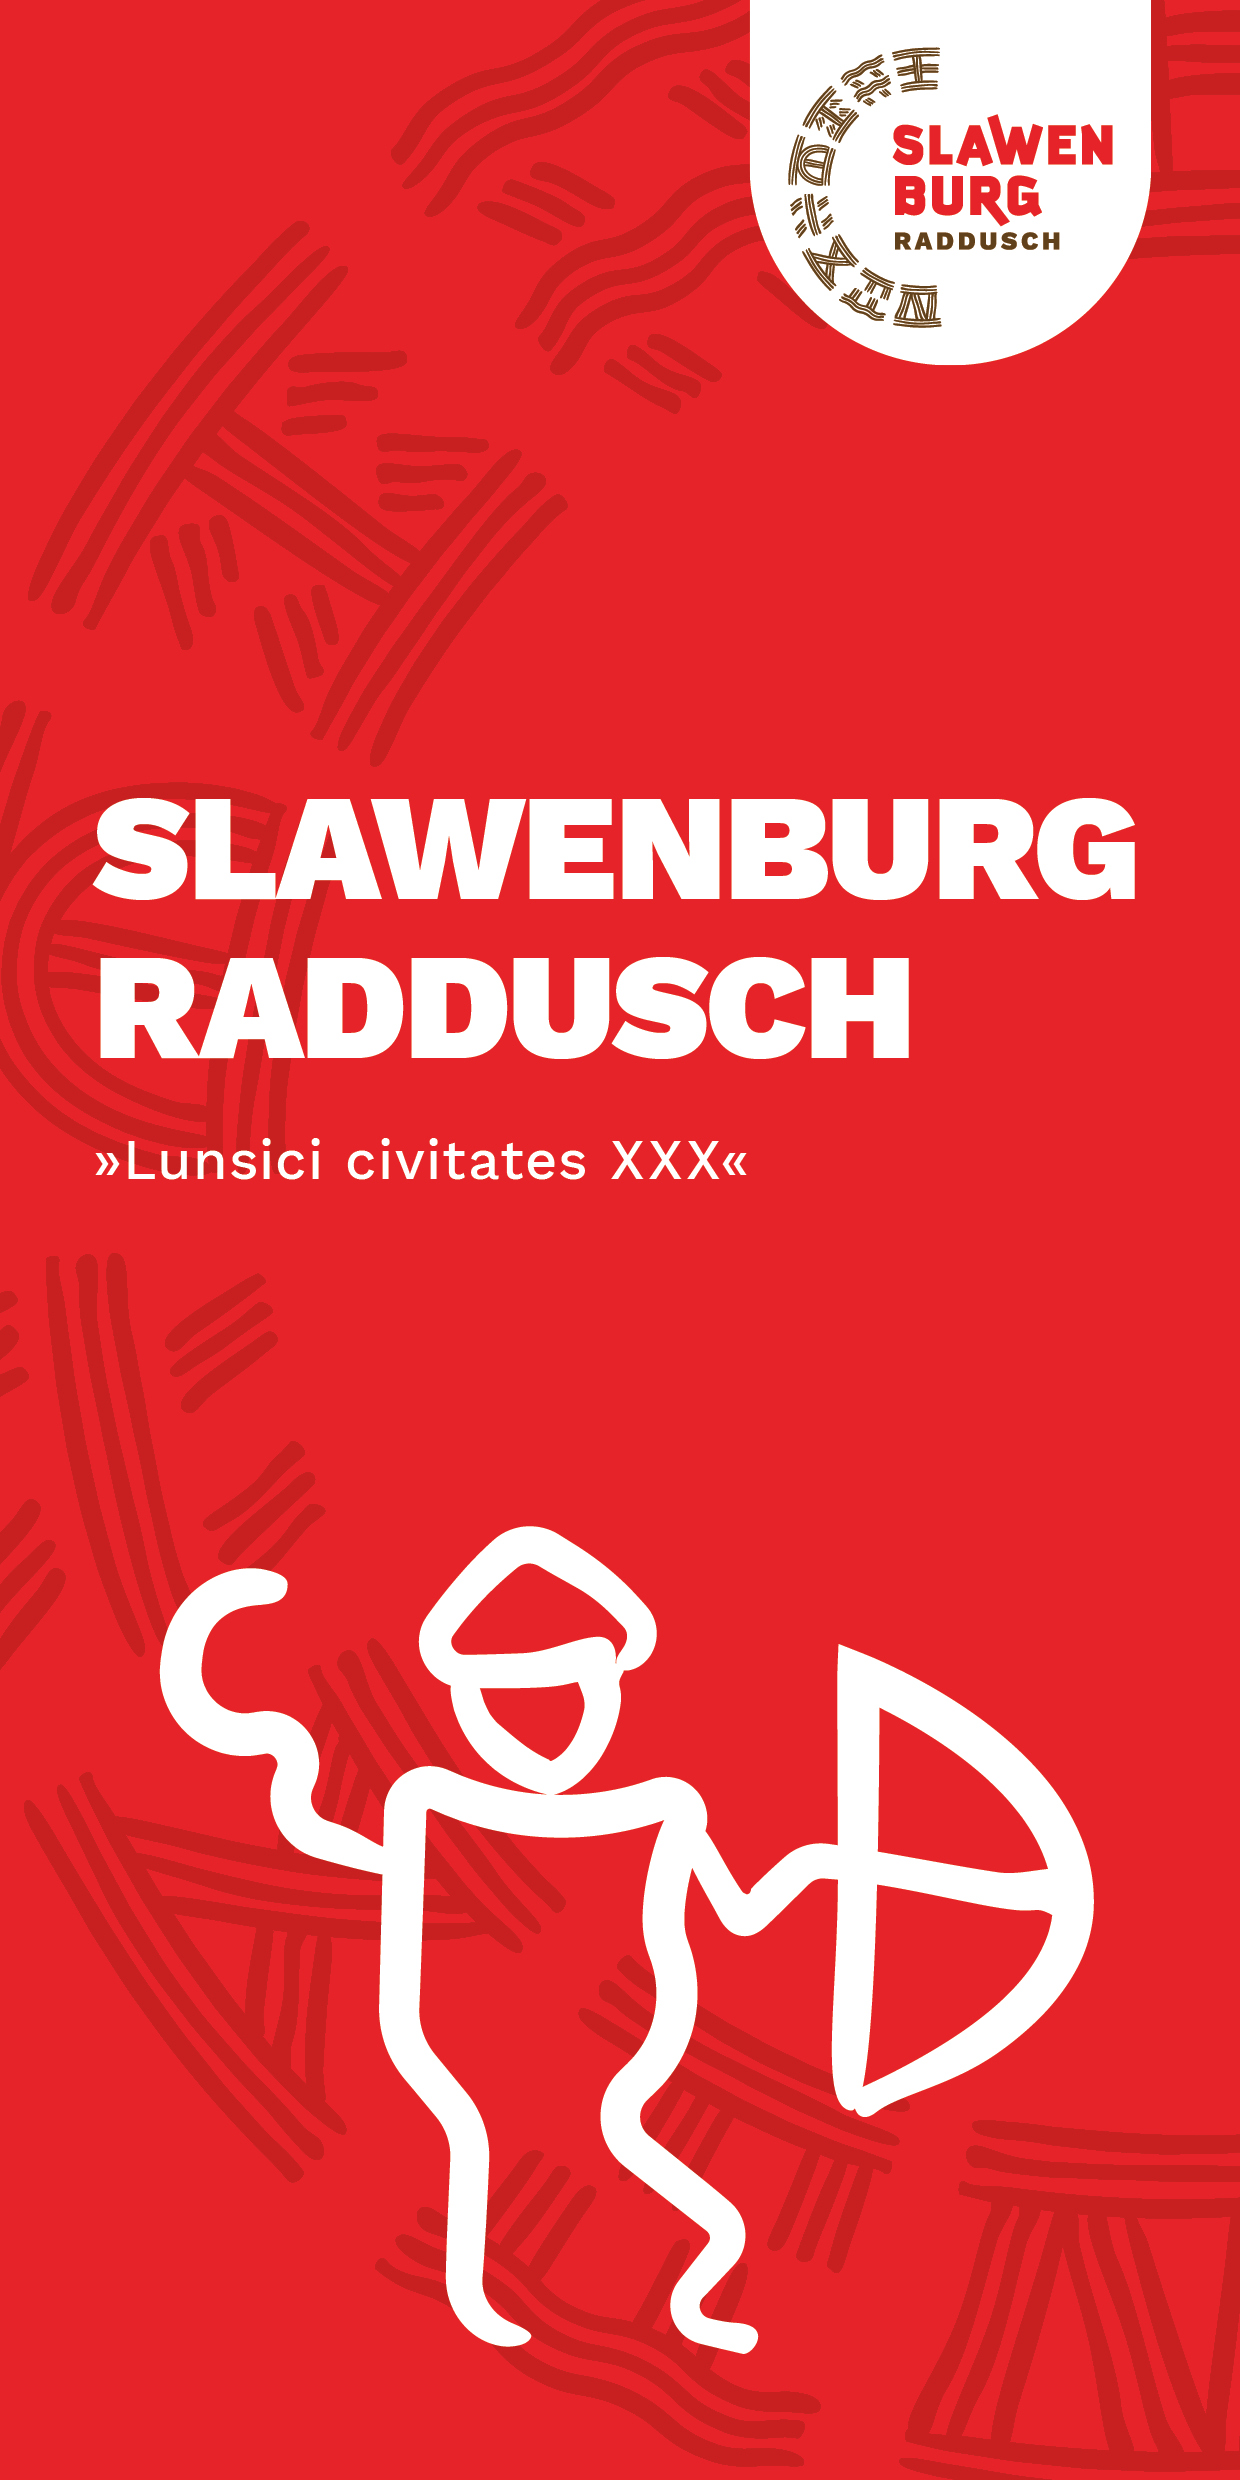 Image-Flyer Slawenburg Raddusch